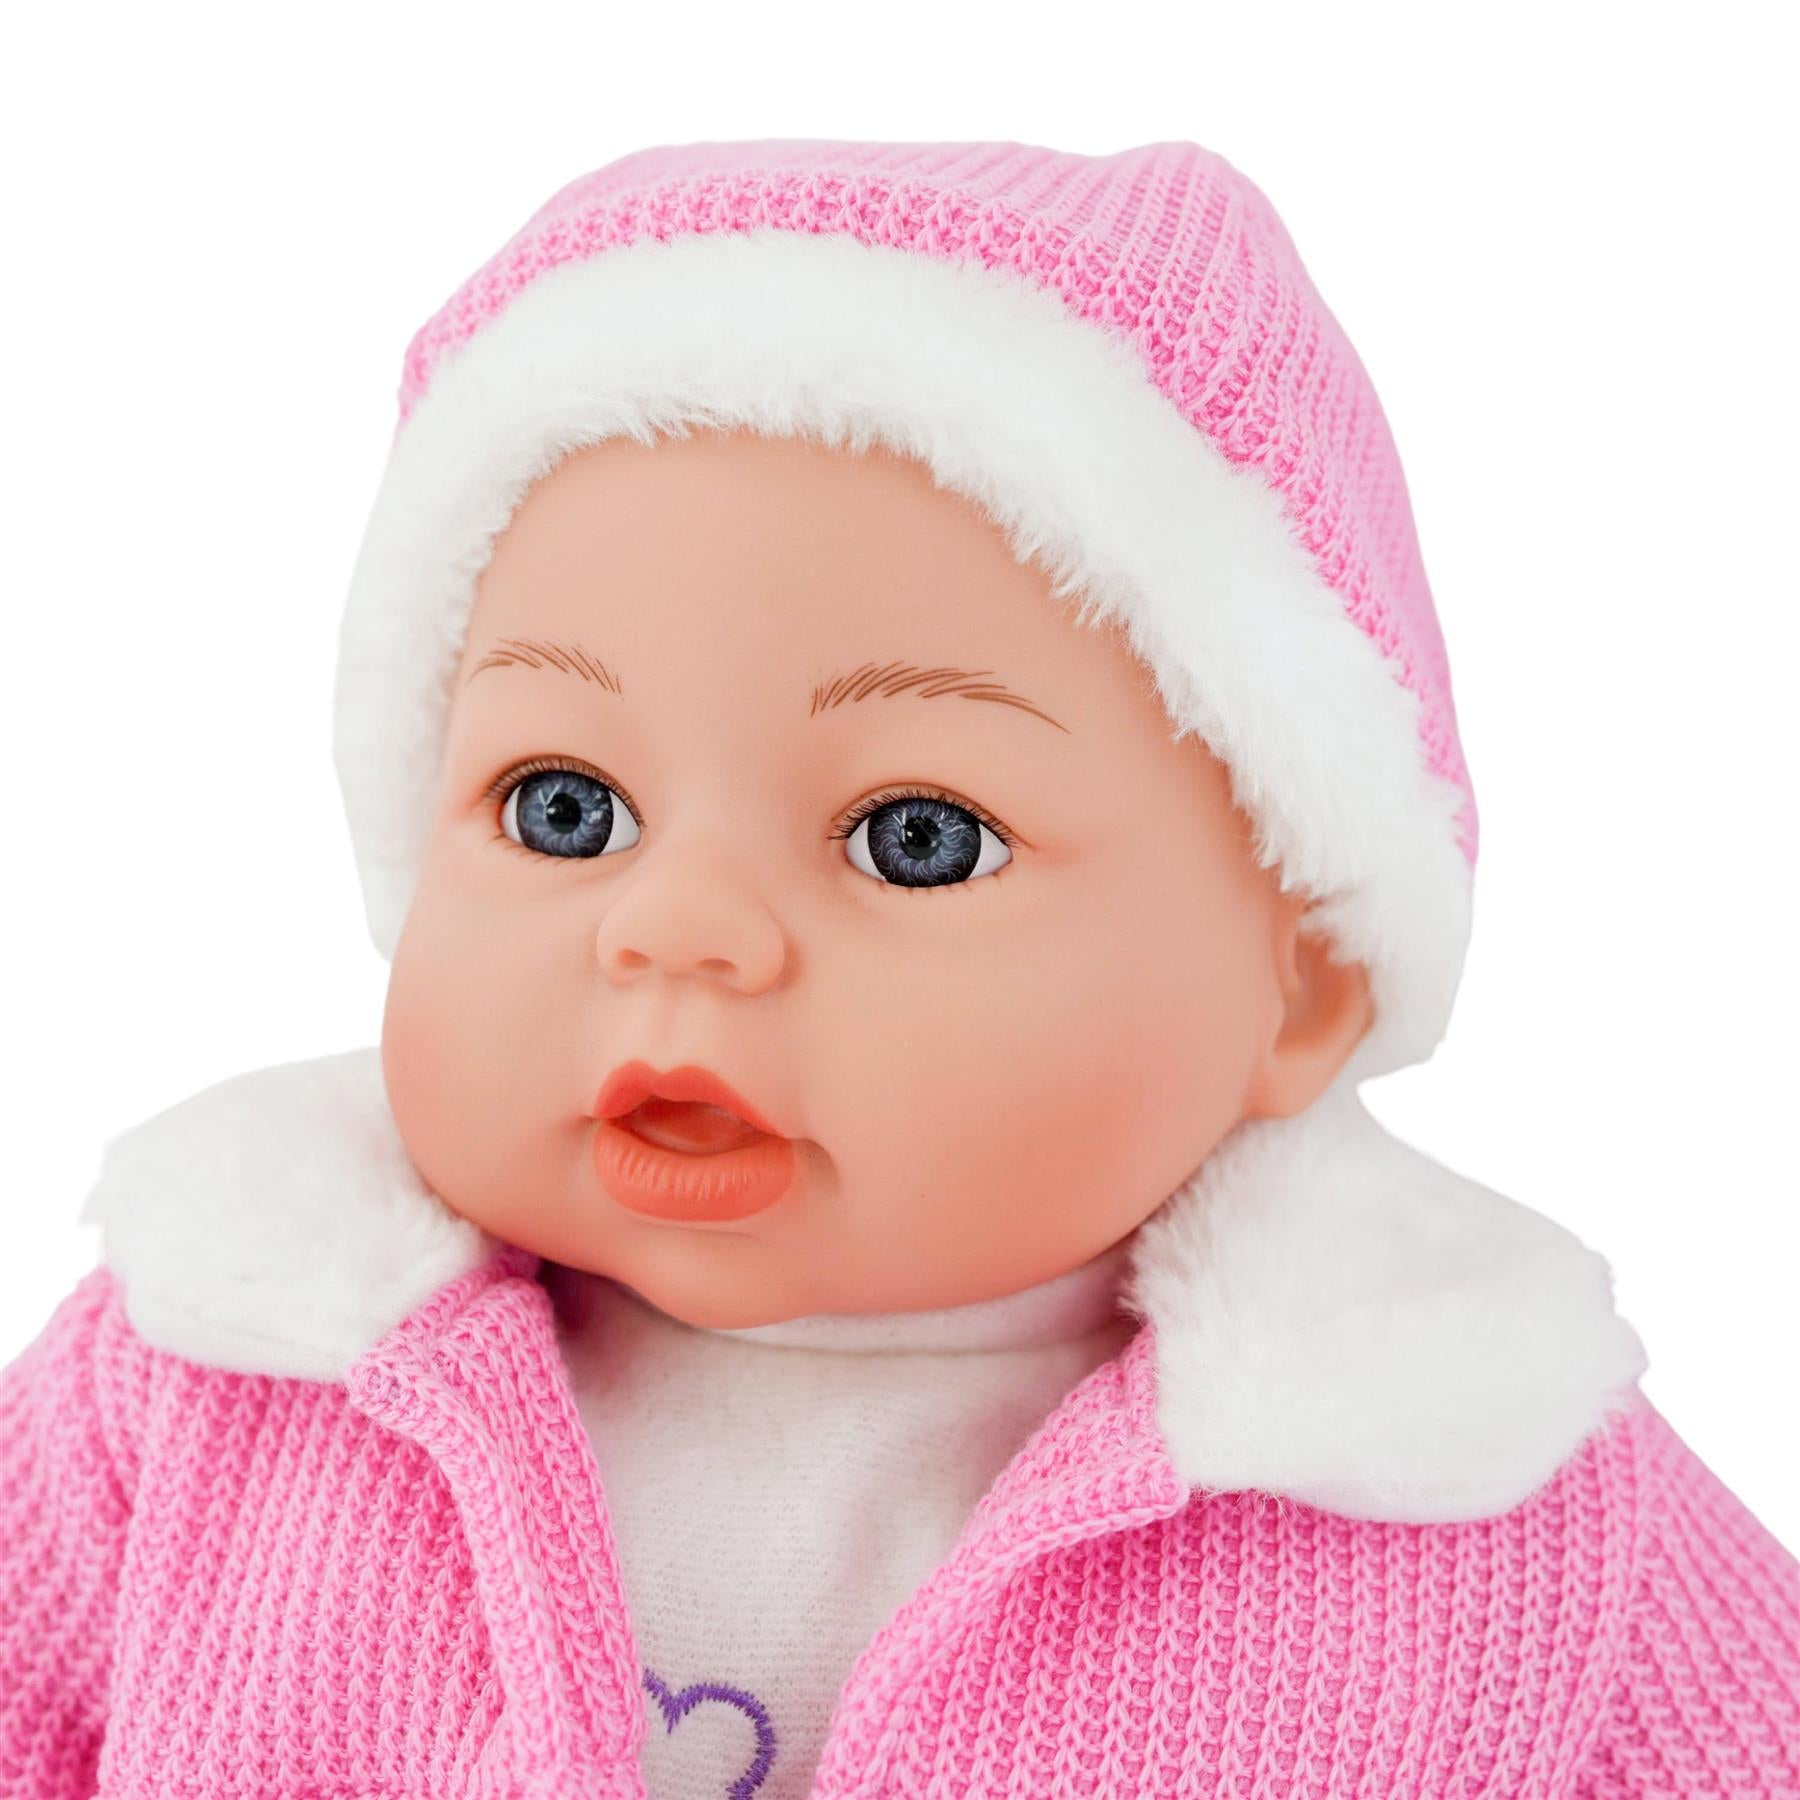 18" Bibi Girl Doll In Pink Coat by BiBi Doll - The Magic Toy Shop